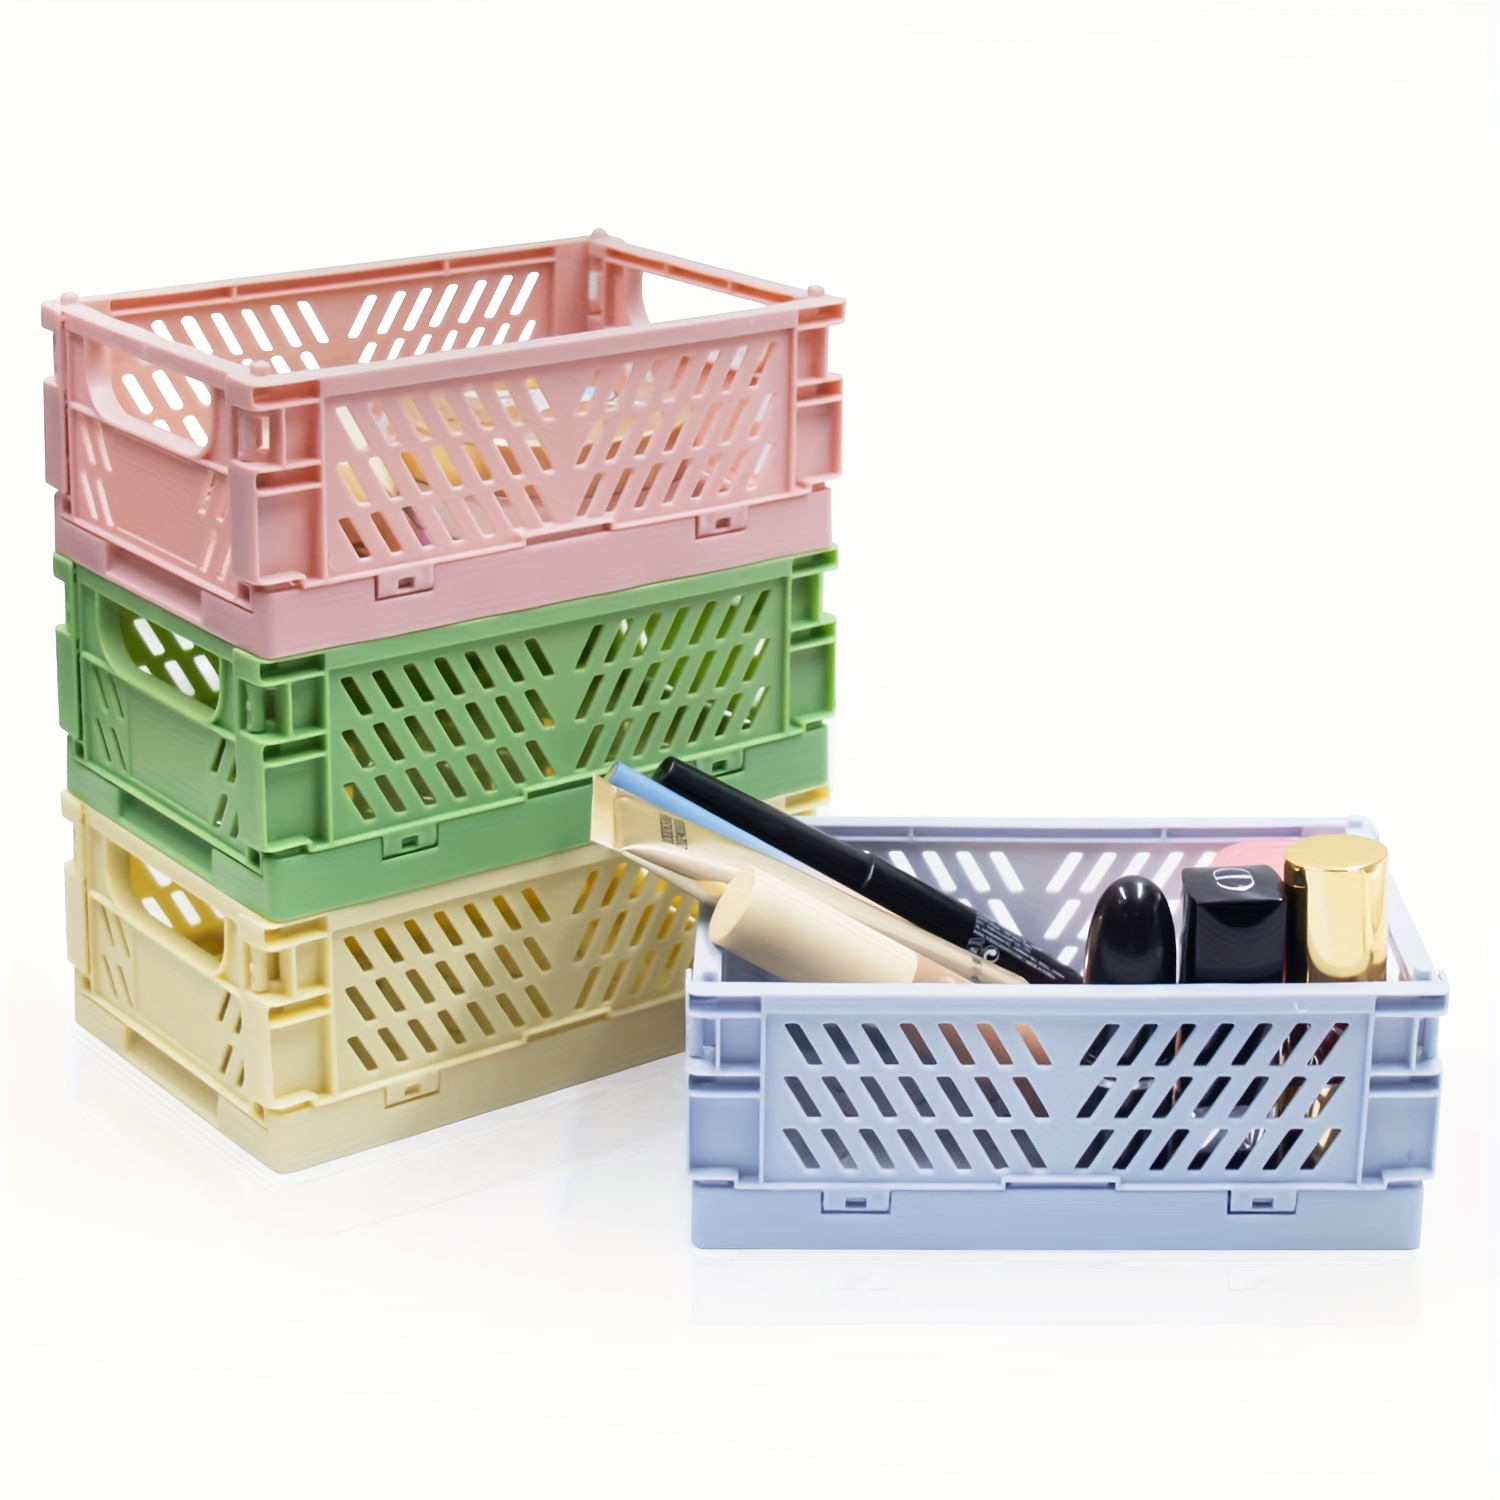  Plastic Folding Baskets, Small Basket Organizer for